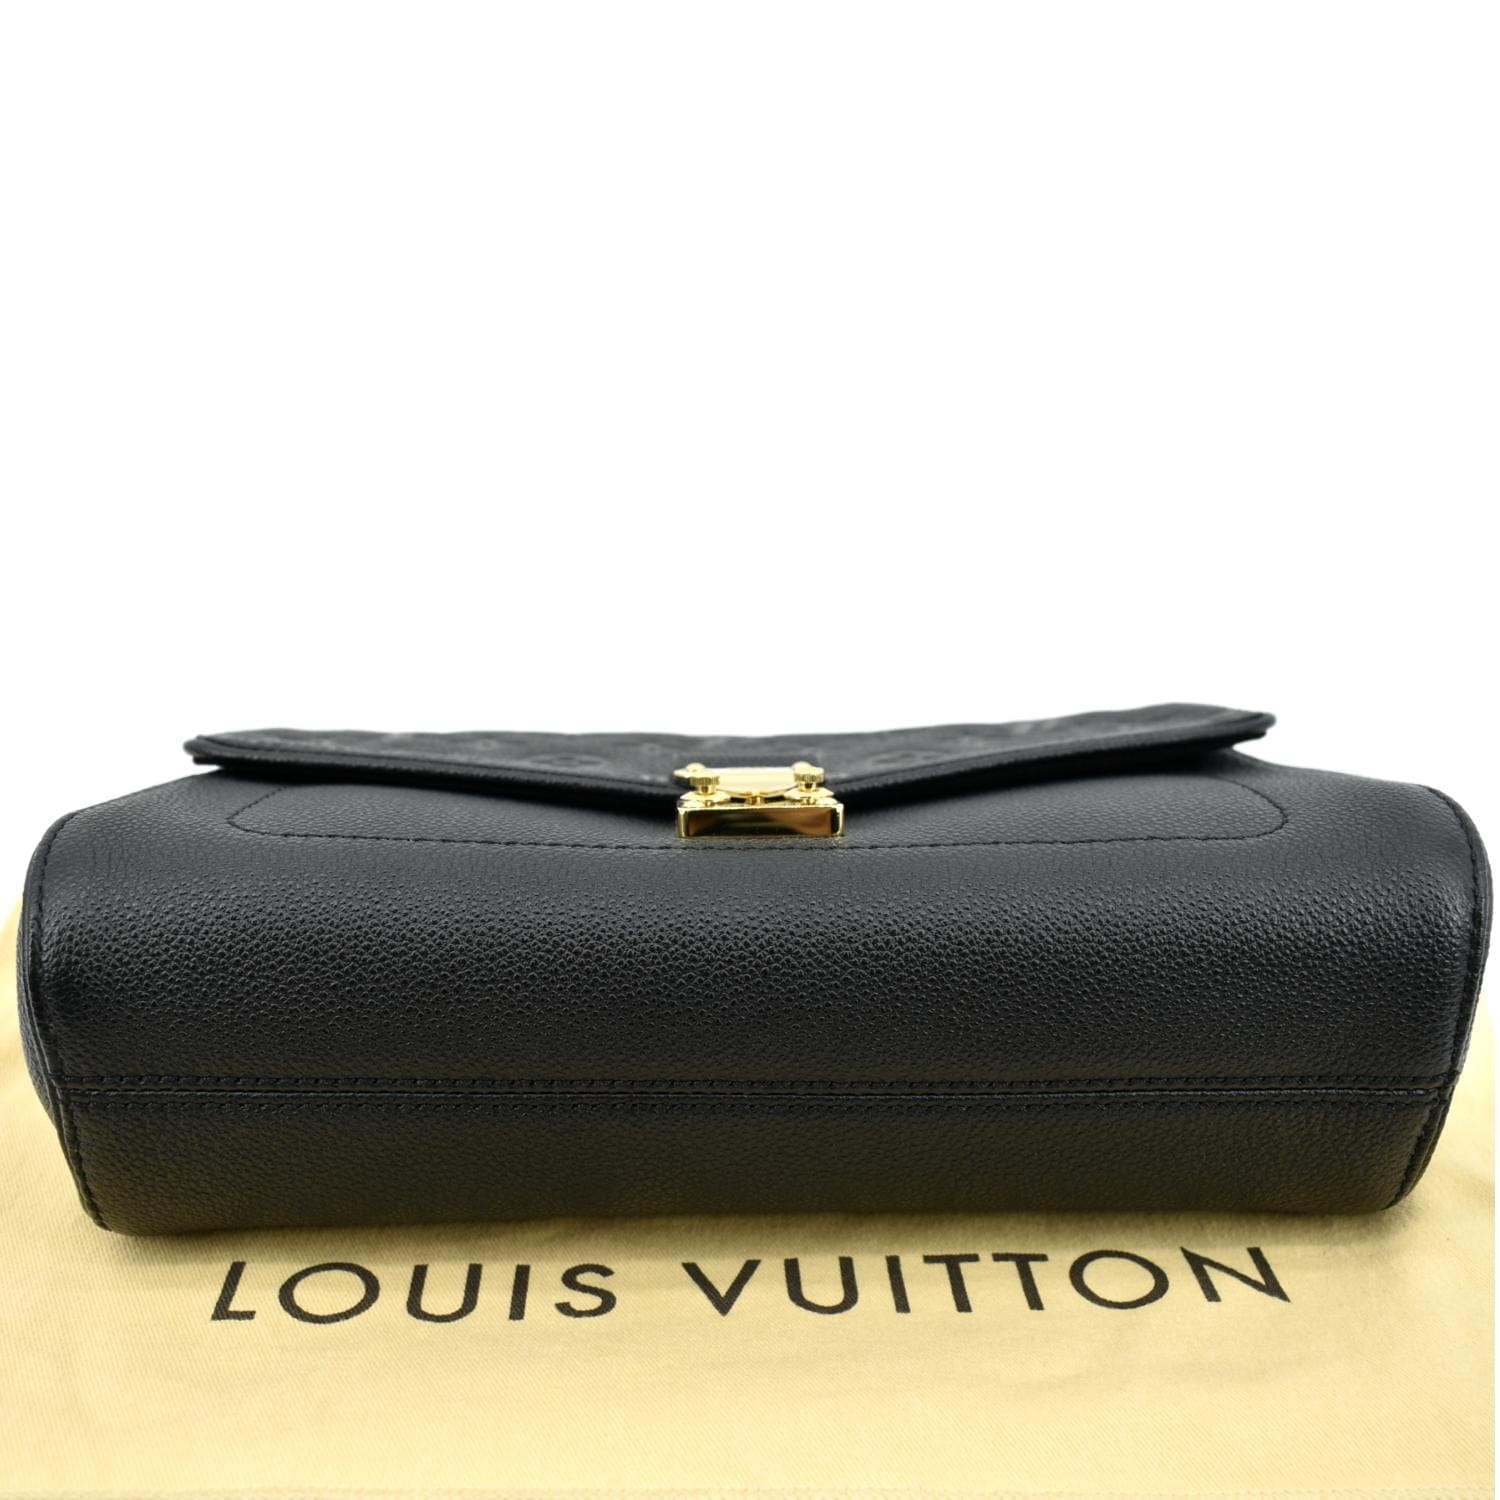 Louis Vuitton Empreinte Saint Germain Mm - 2 For Sale on 1stDibs